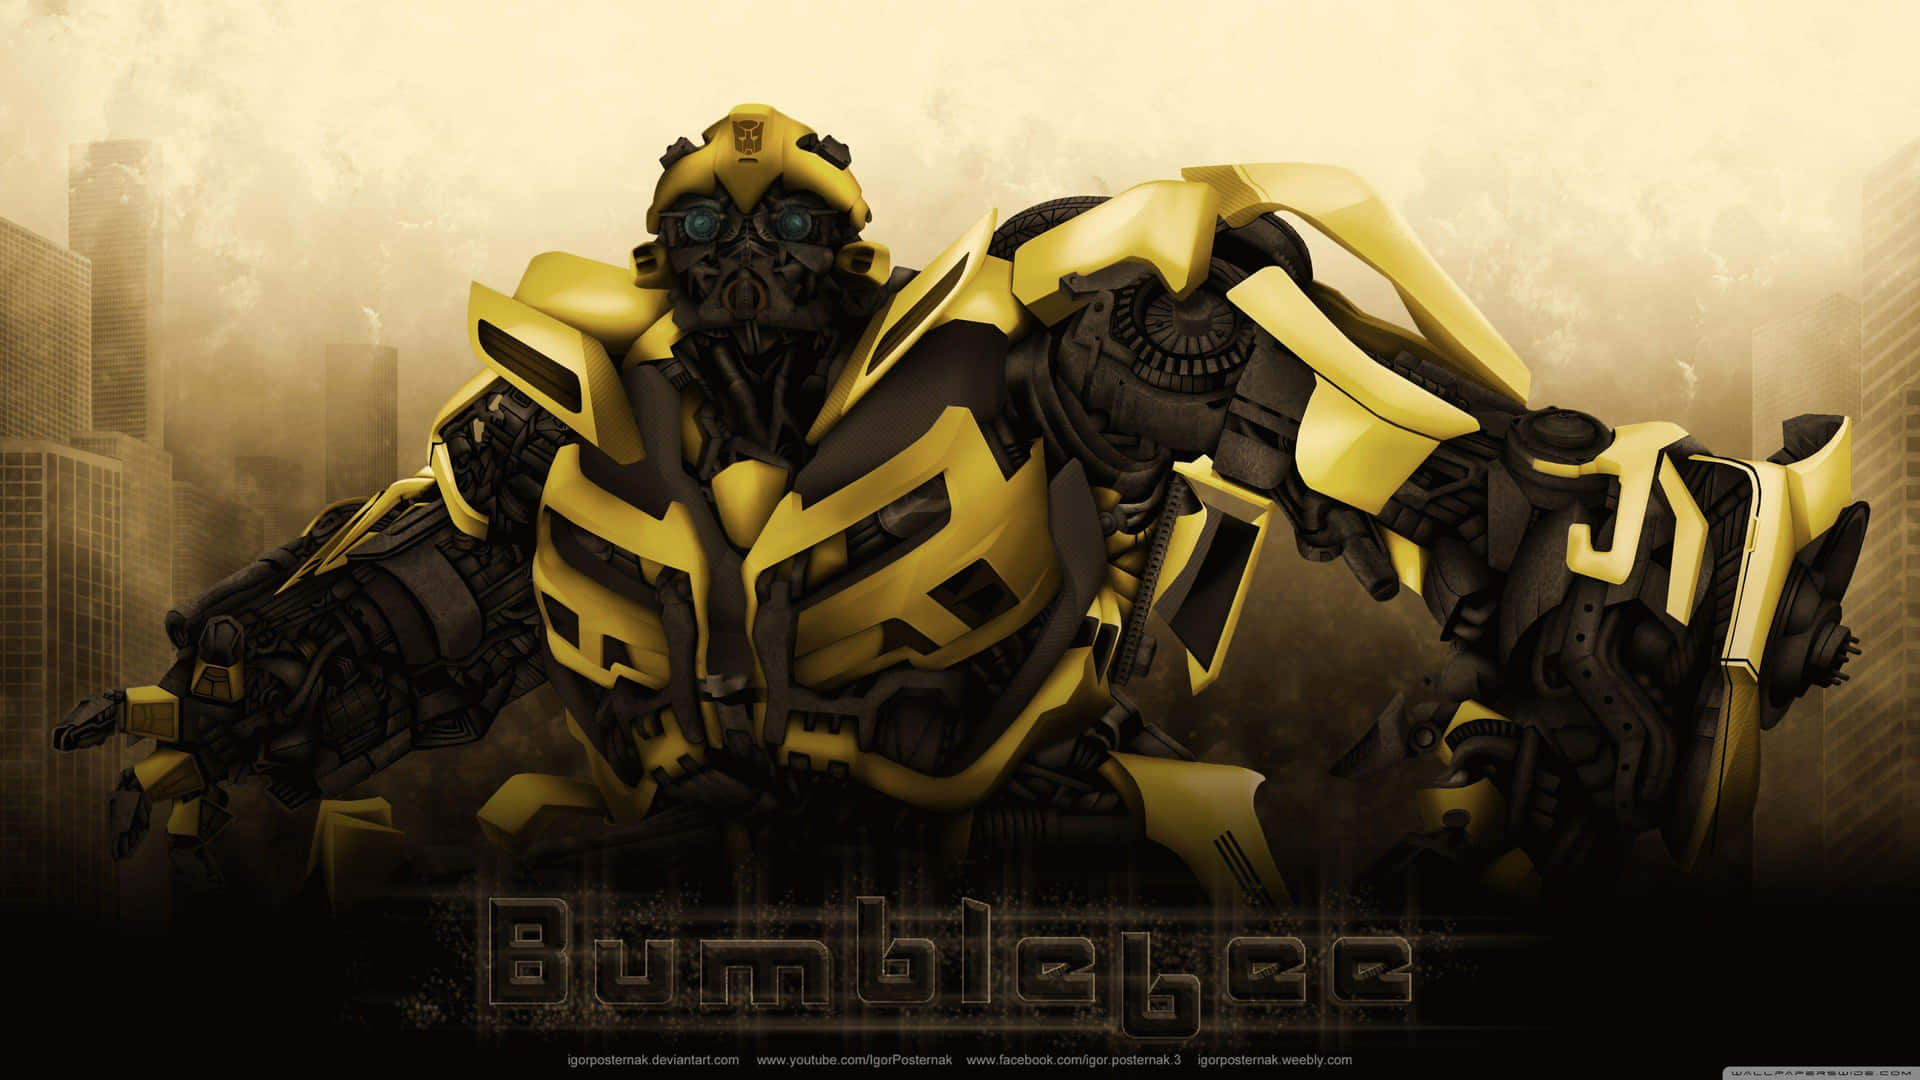 Bumblebeewird Zu Einem Kampfbereiten Roboter Transformiert. Wallpaper